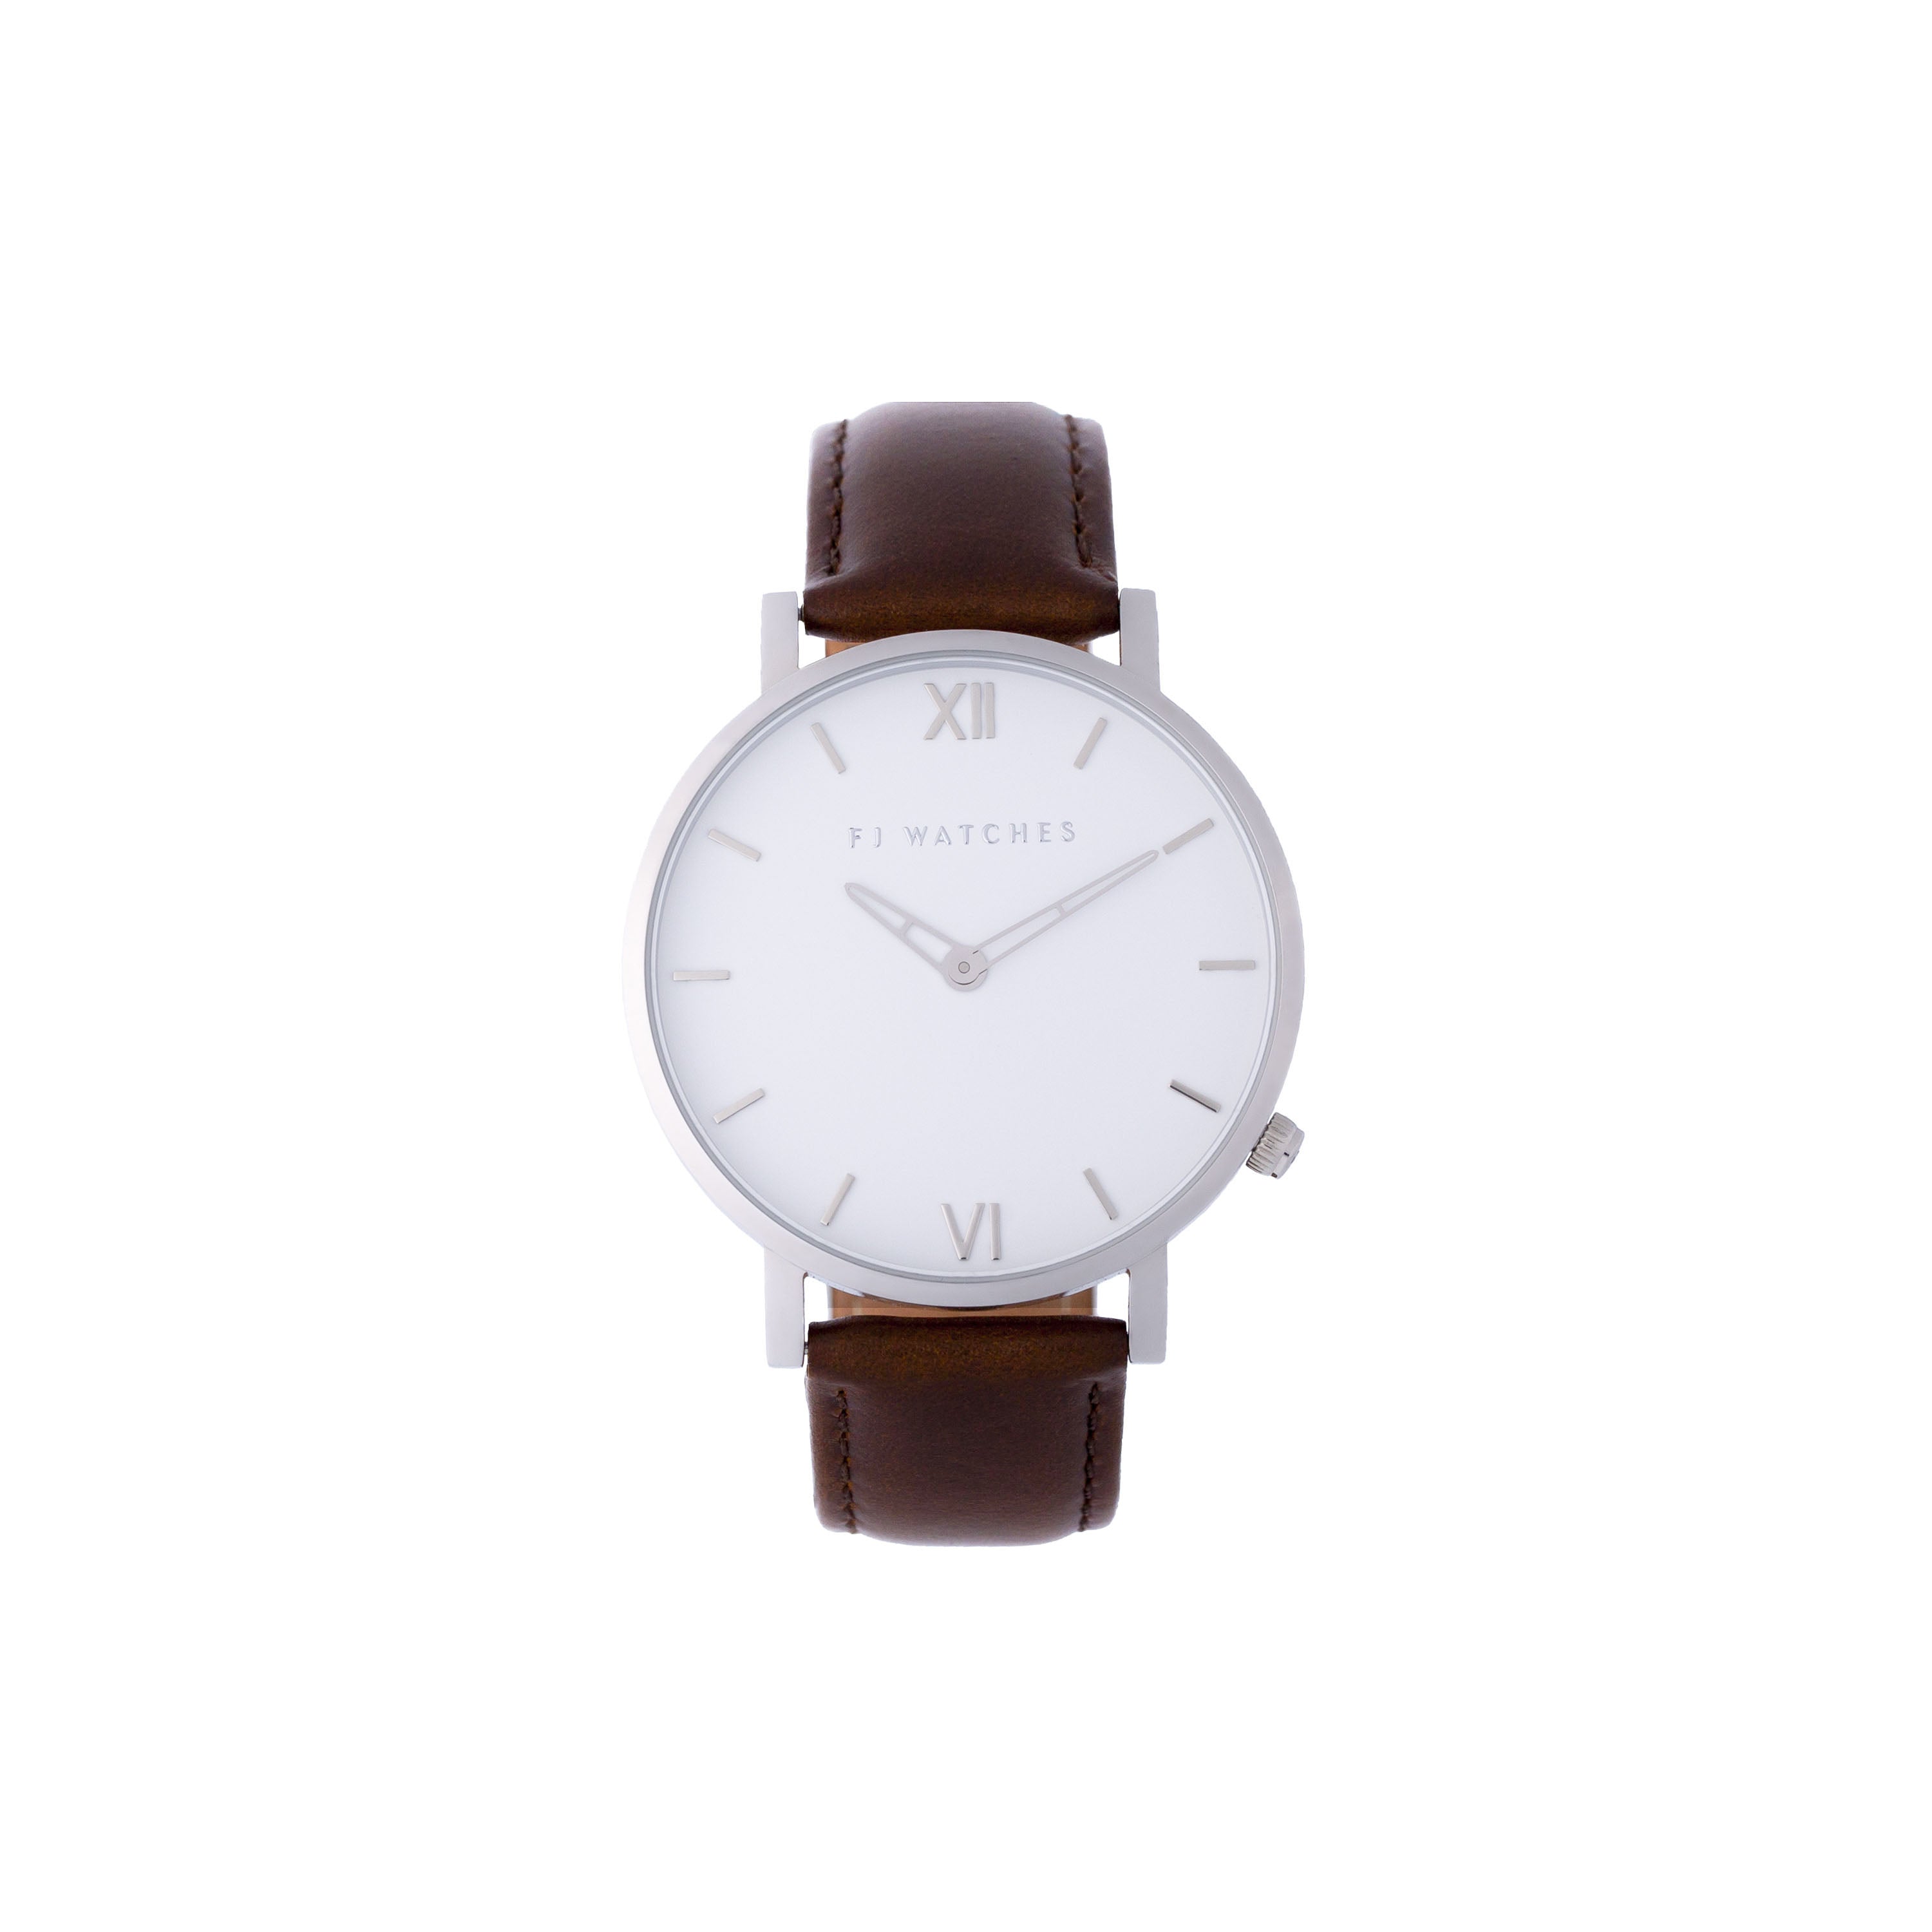 FJ Watches silver sun white men 42mm brown leather strap watch minimalist